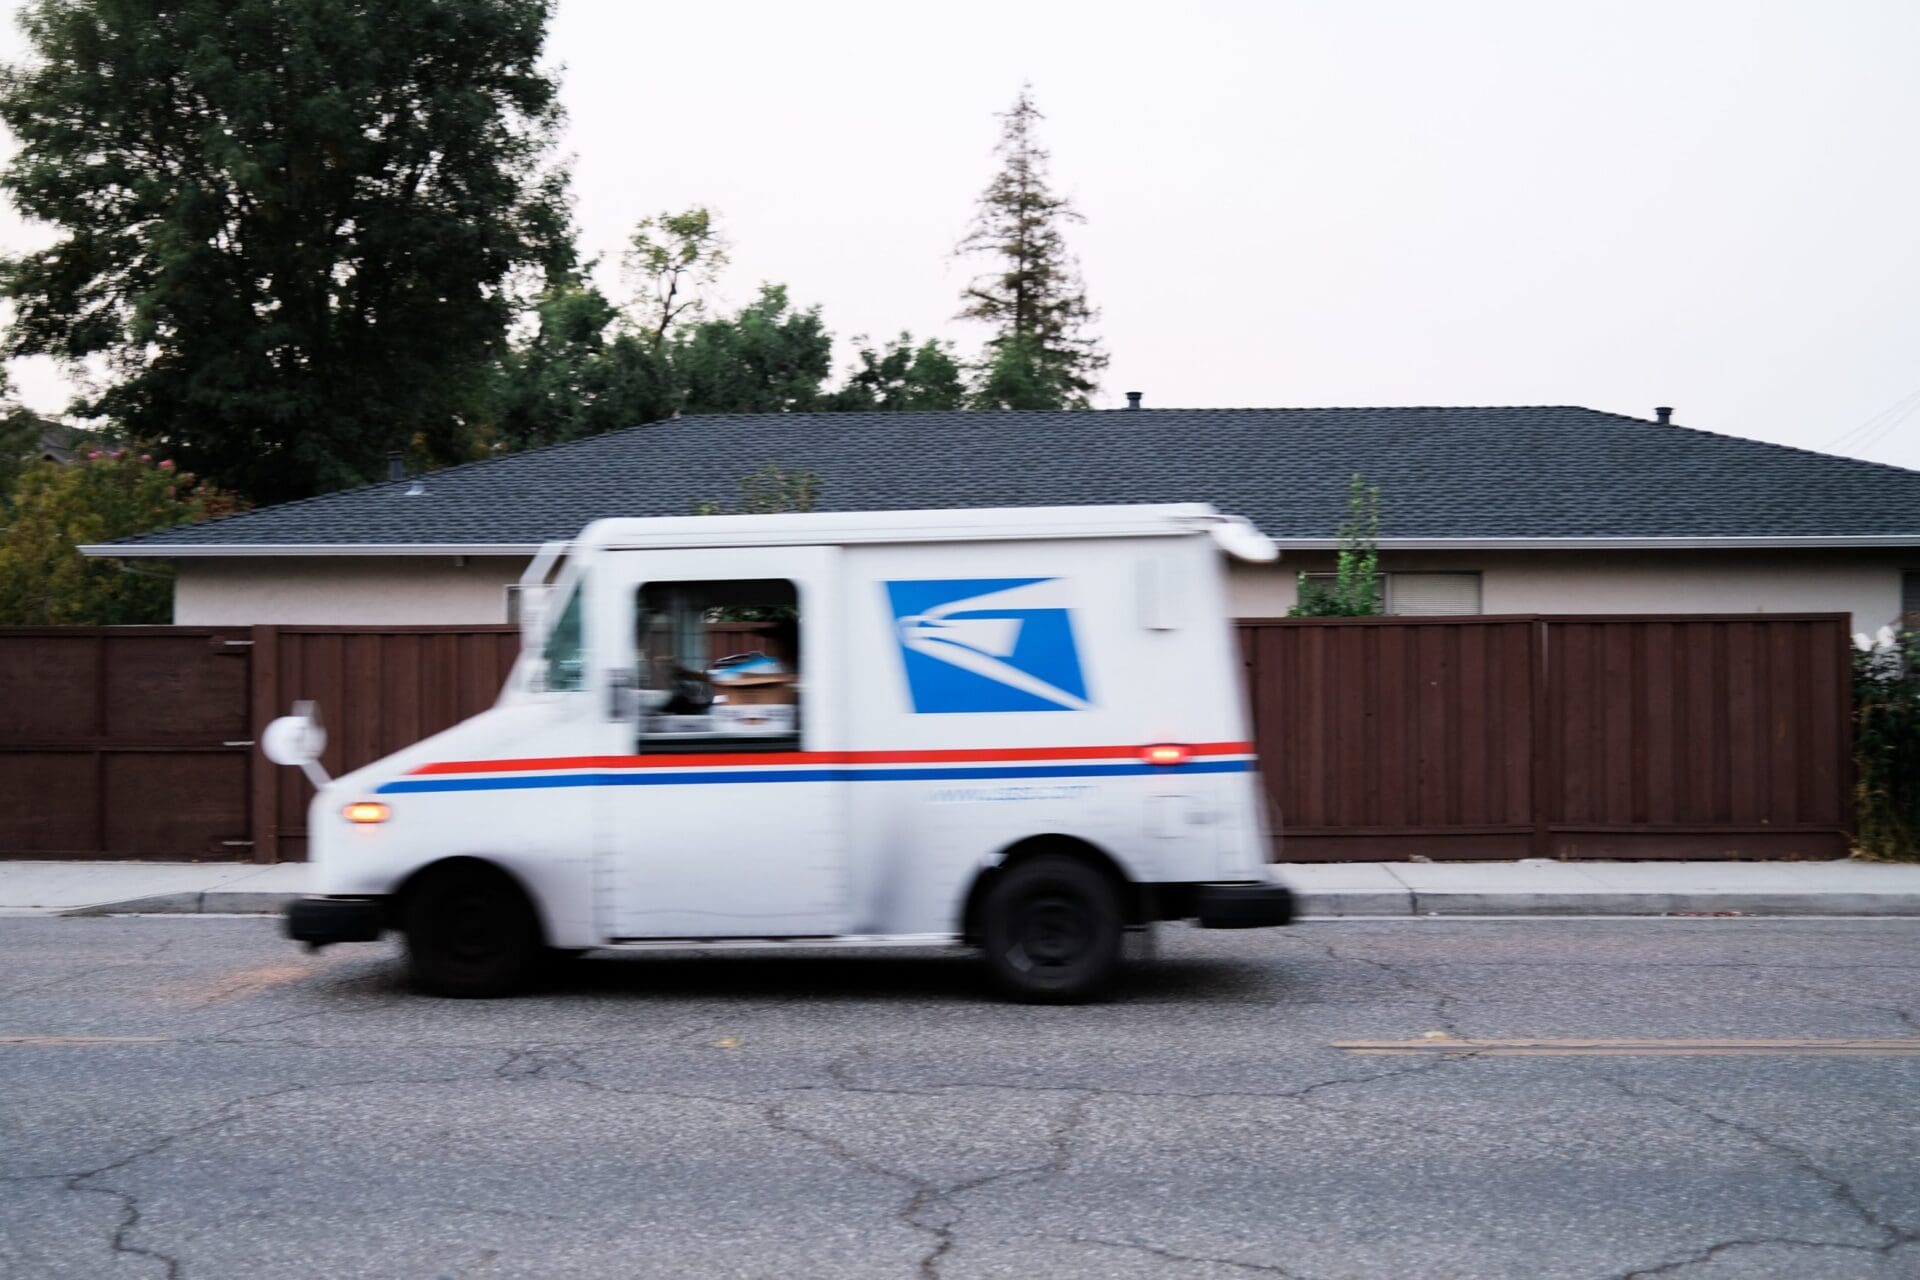 US Mail Truck / Photo by Trinity Nguyen on Unsplash